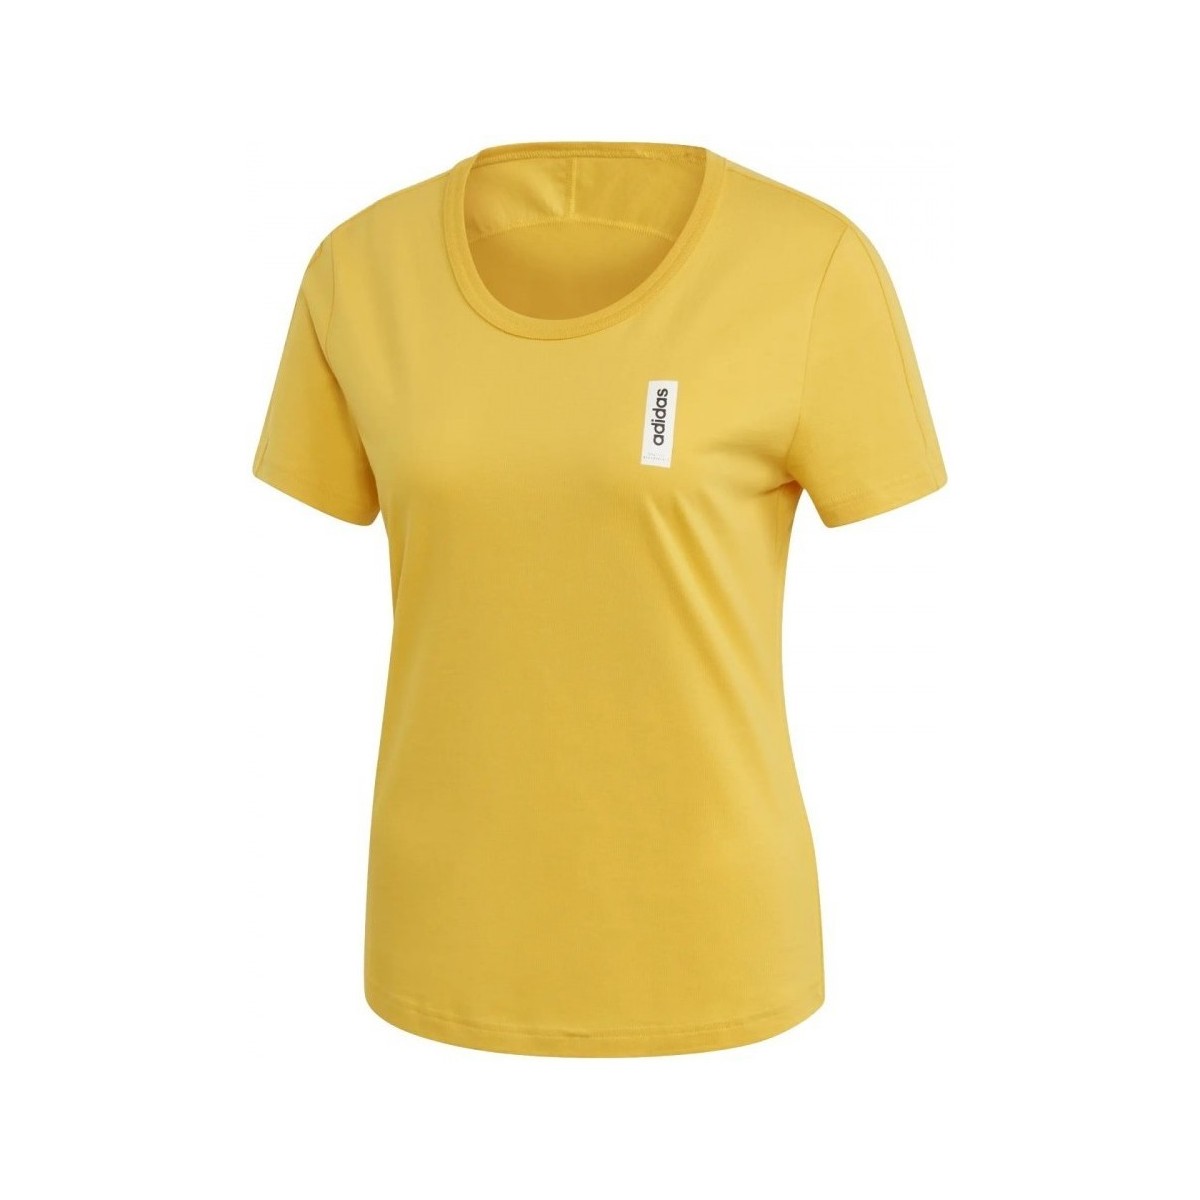 Vêtements Femme T-shirts & Polos adidas Originals W Bb T Jaune